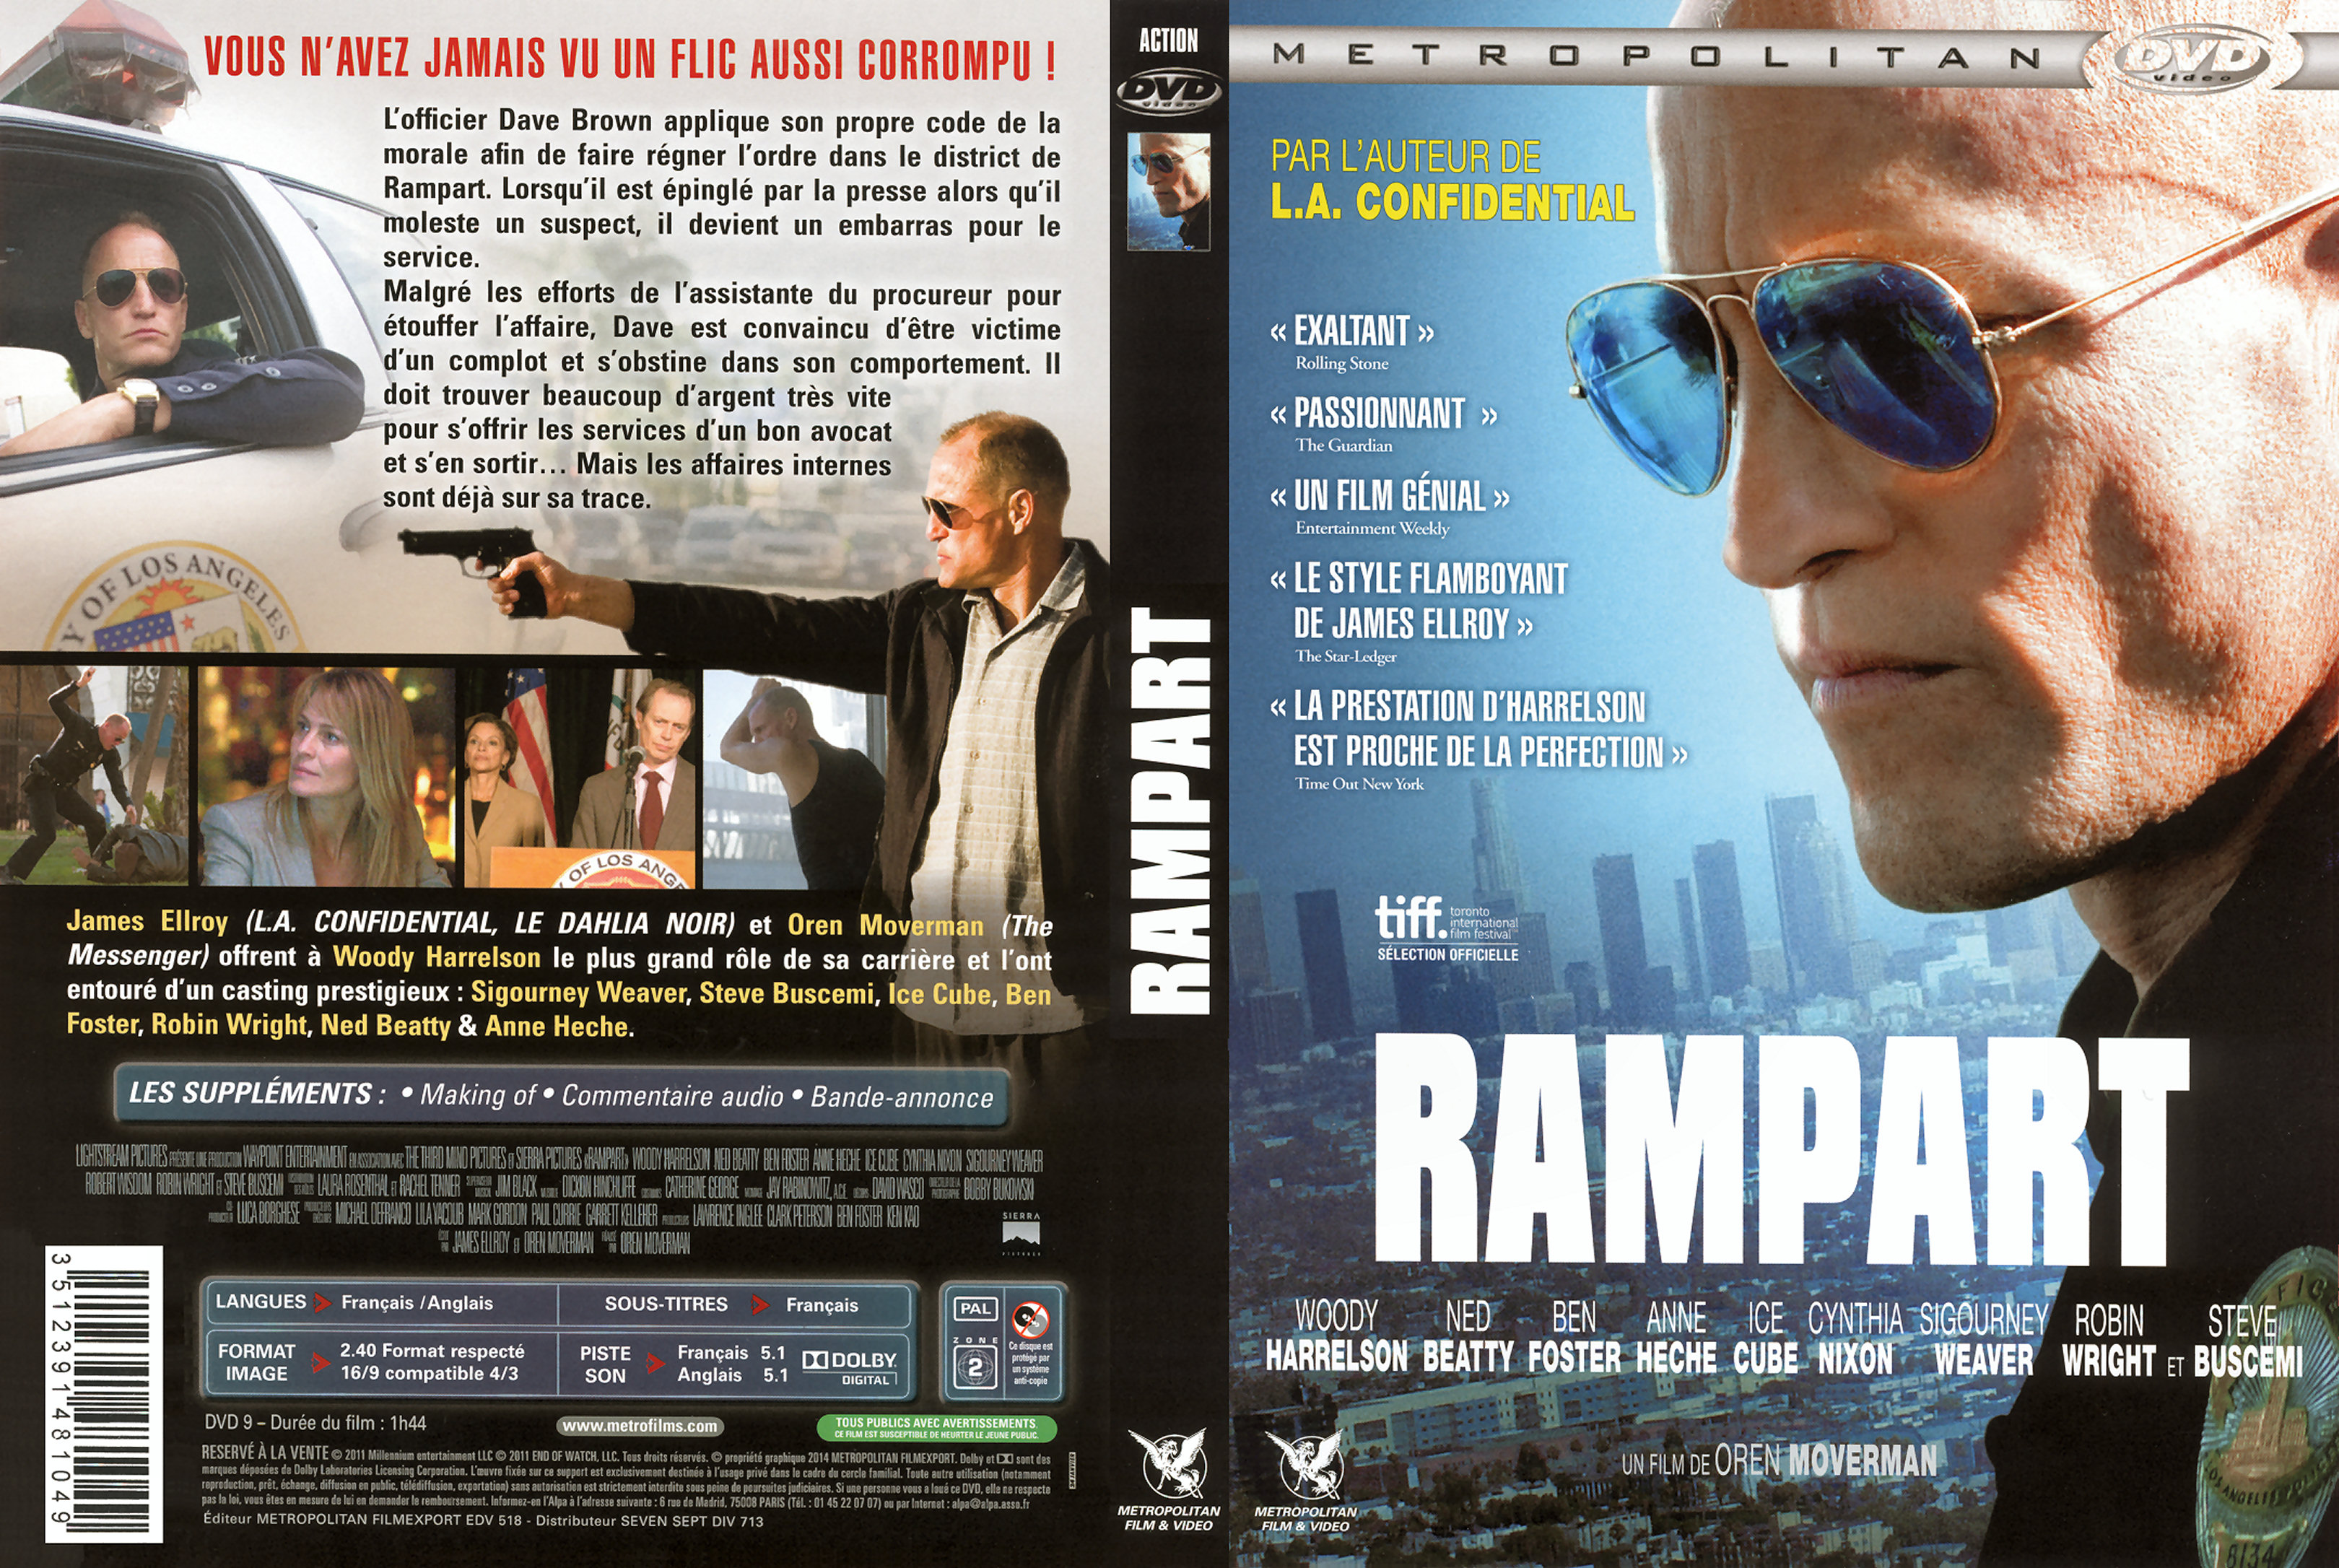 Jaquette DVD Rampart v2